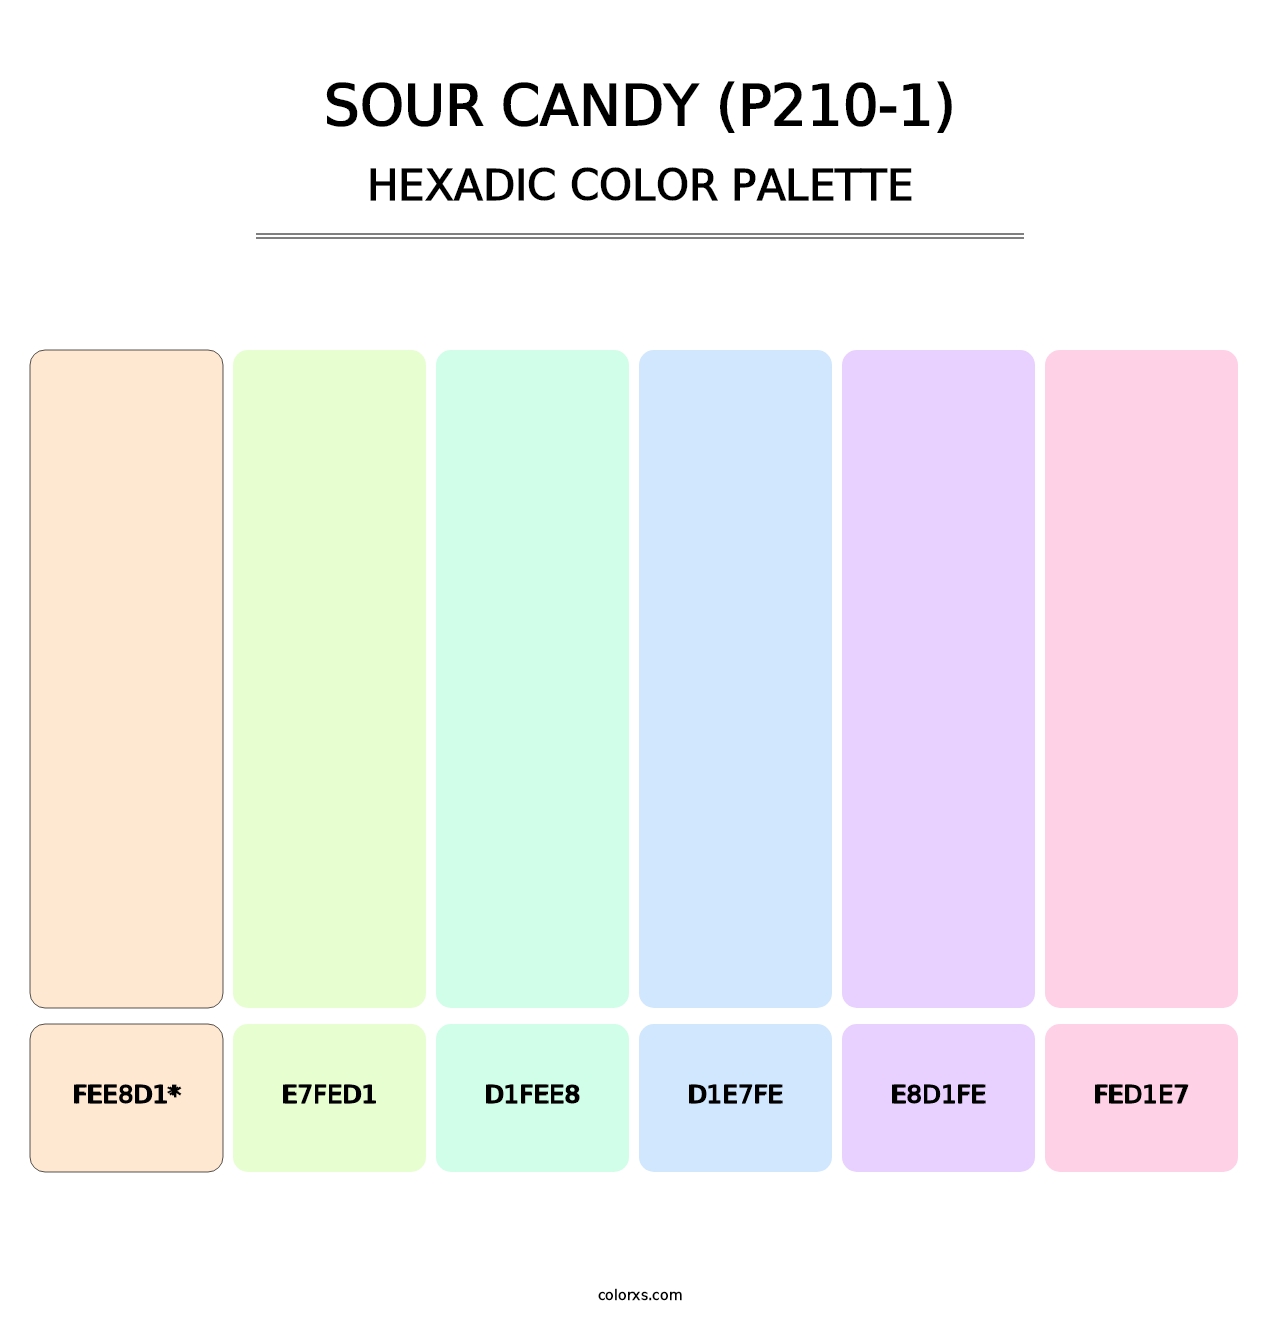 Sour Candy (P210-1) - Hexadic Color Palette